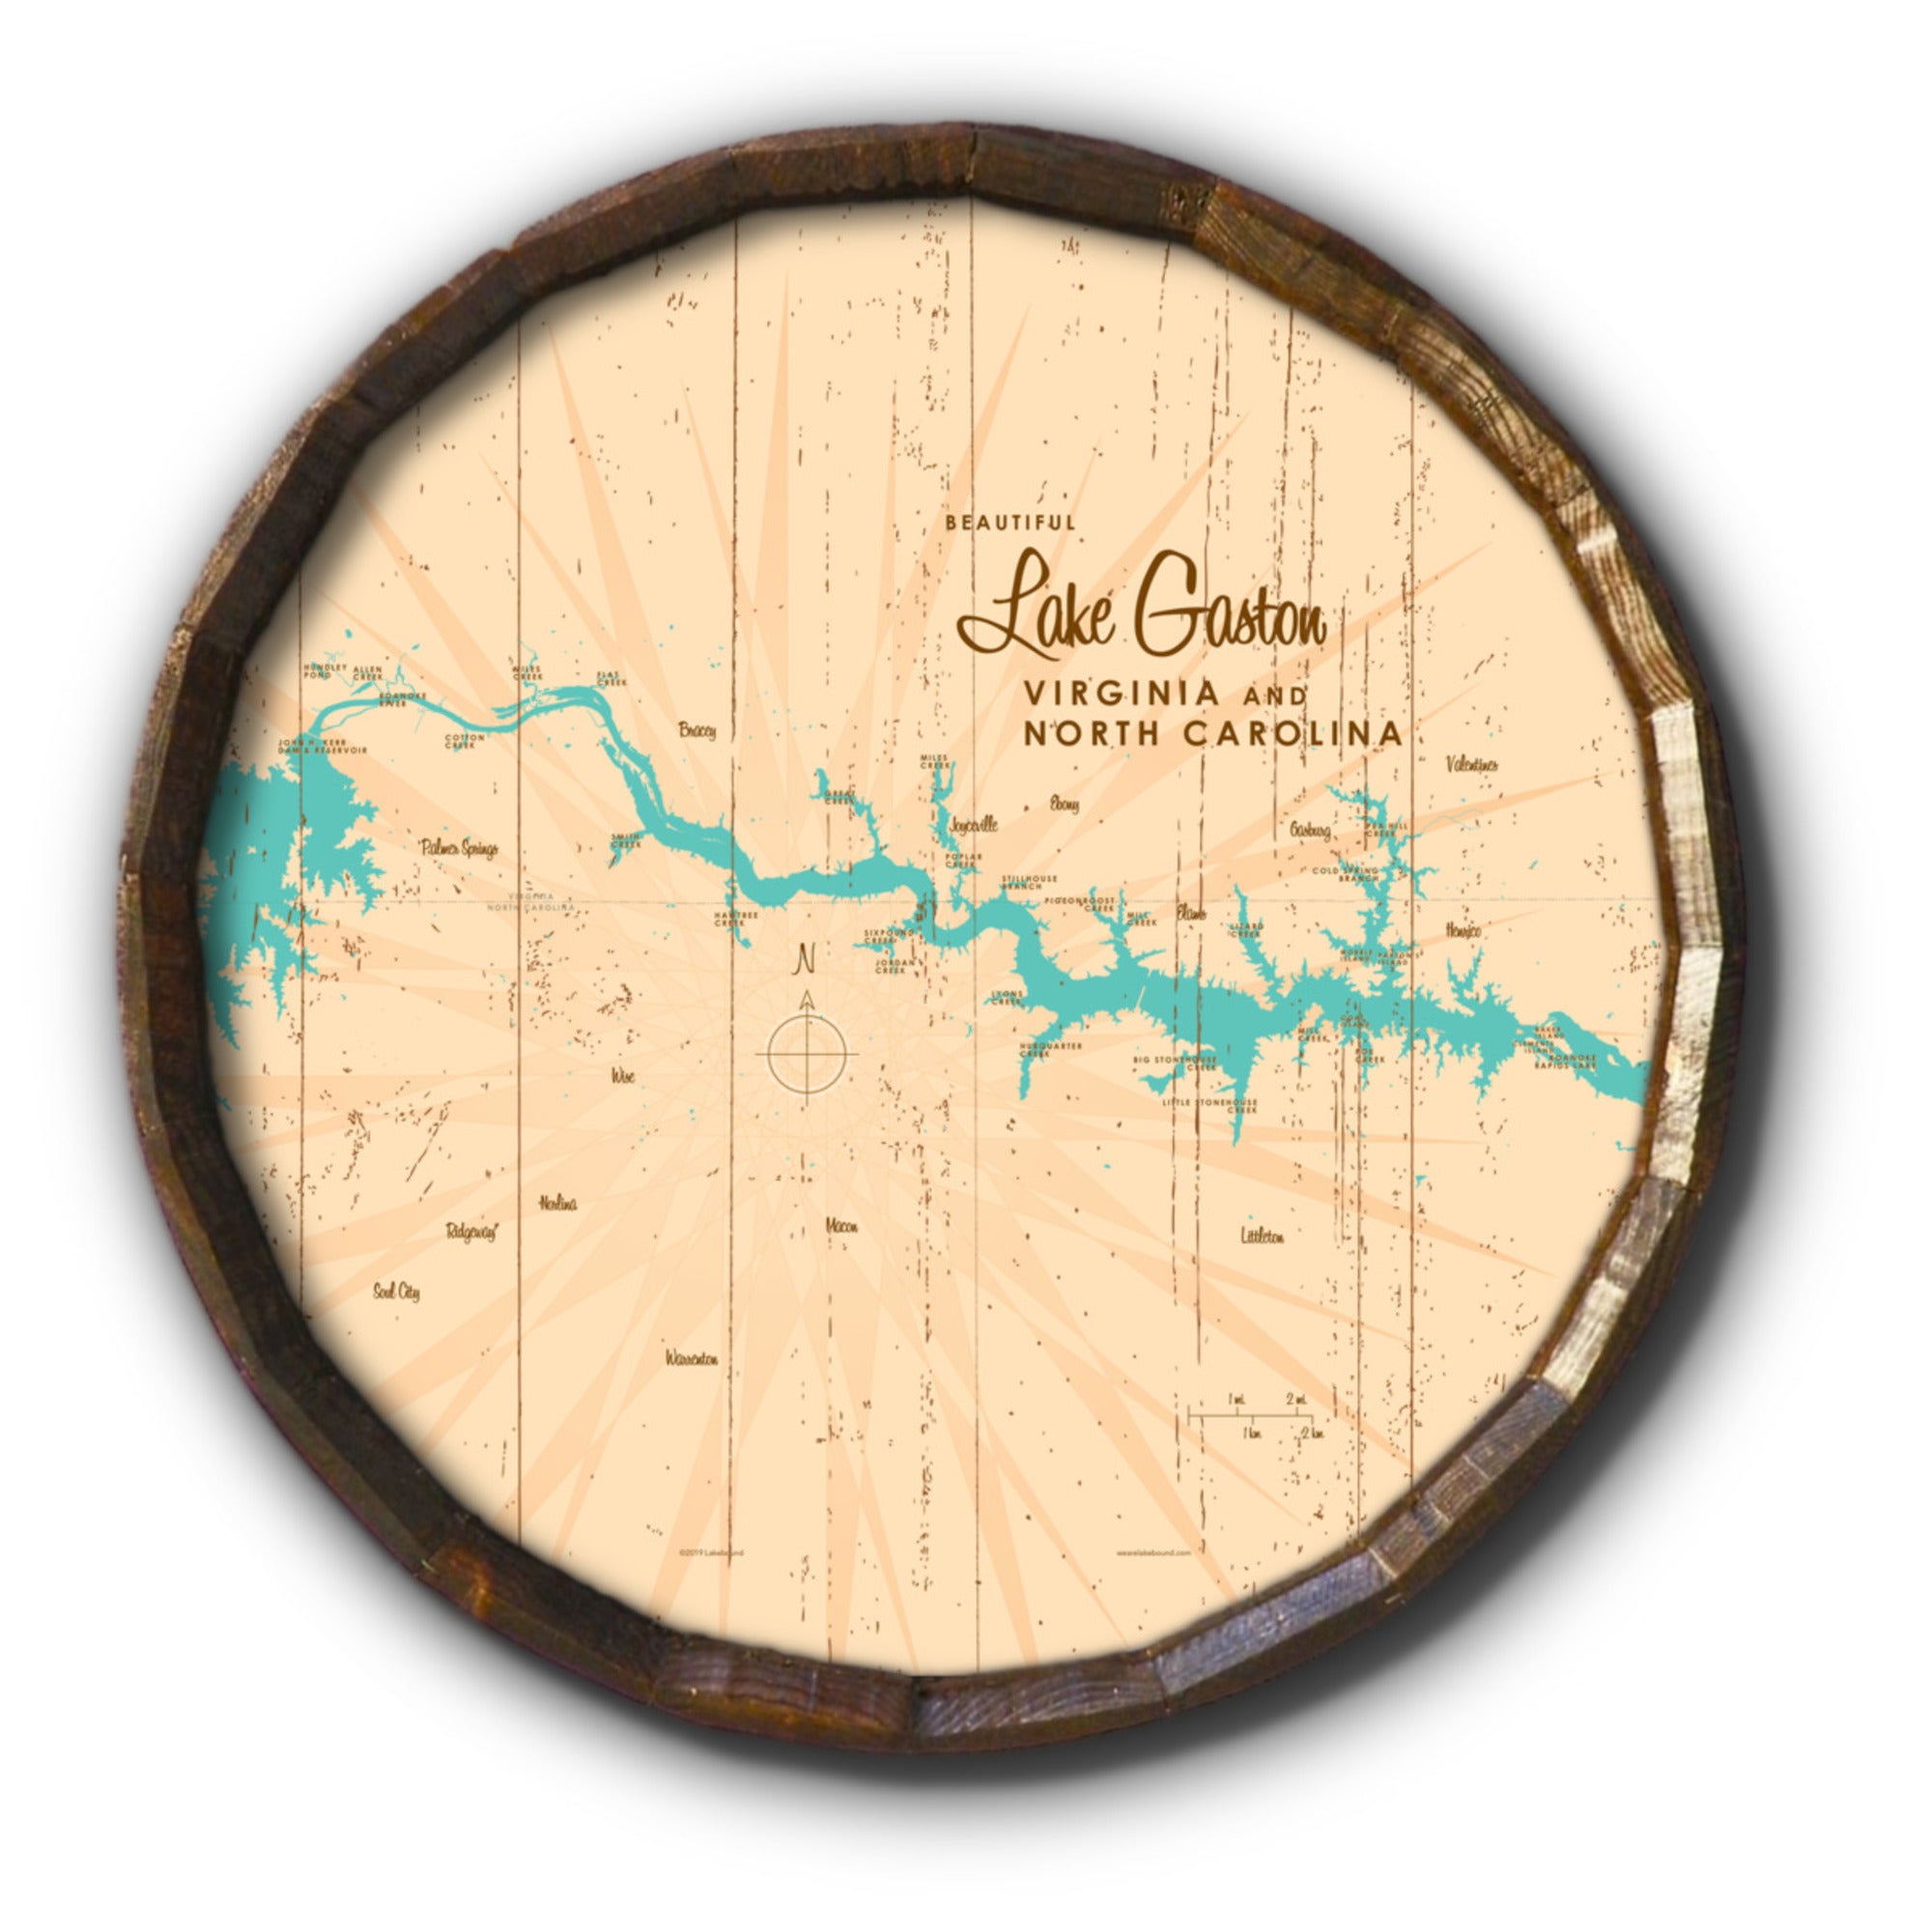 Lake Gaston VA North Carolina, Rustic Barrel End Map Art